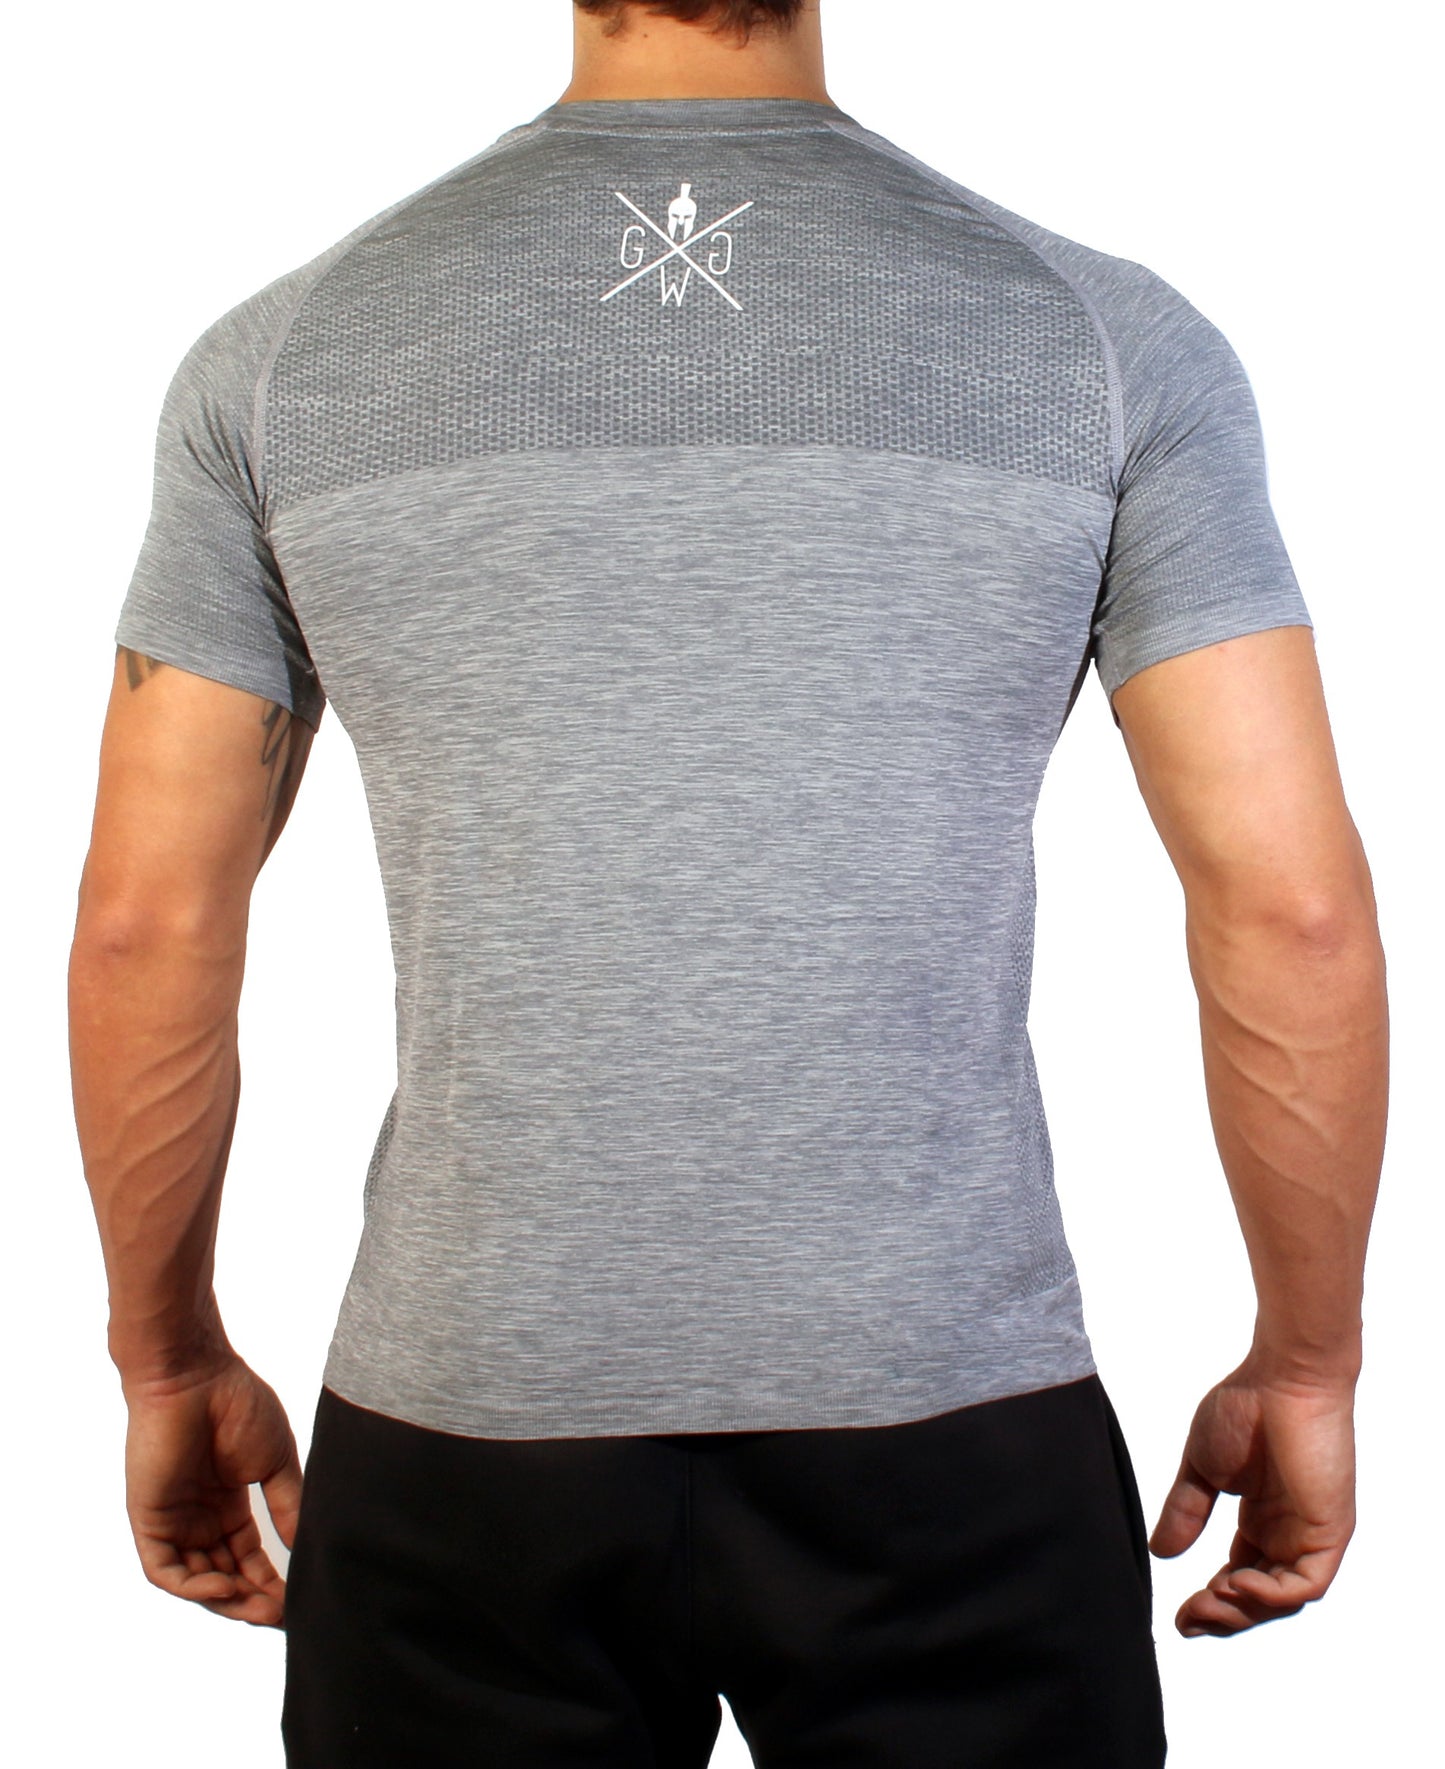 Seamless Fitness Shirt - Frost Gray